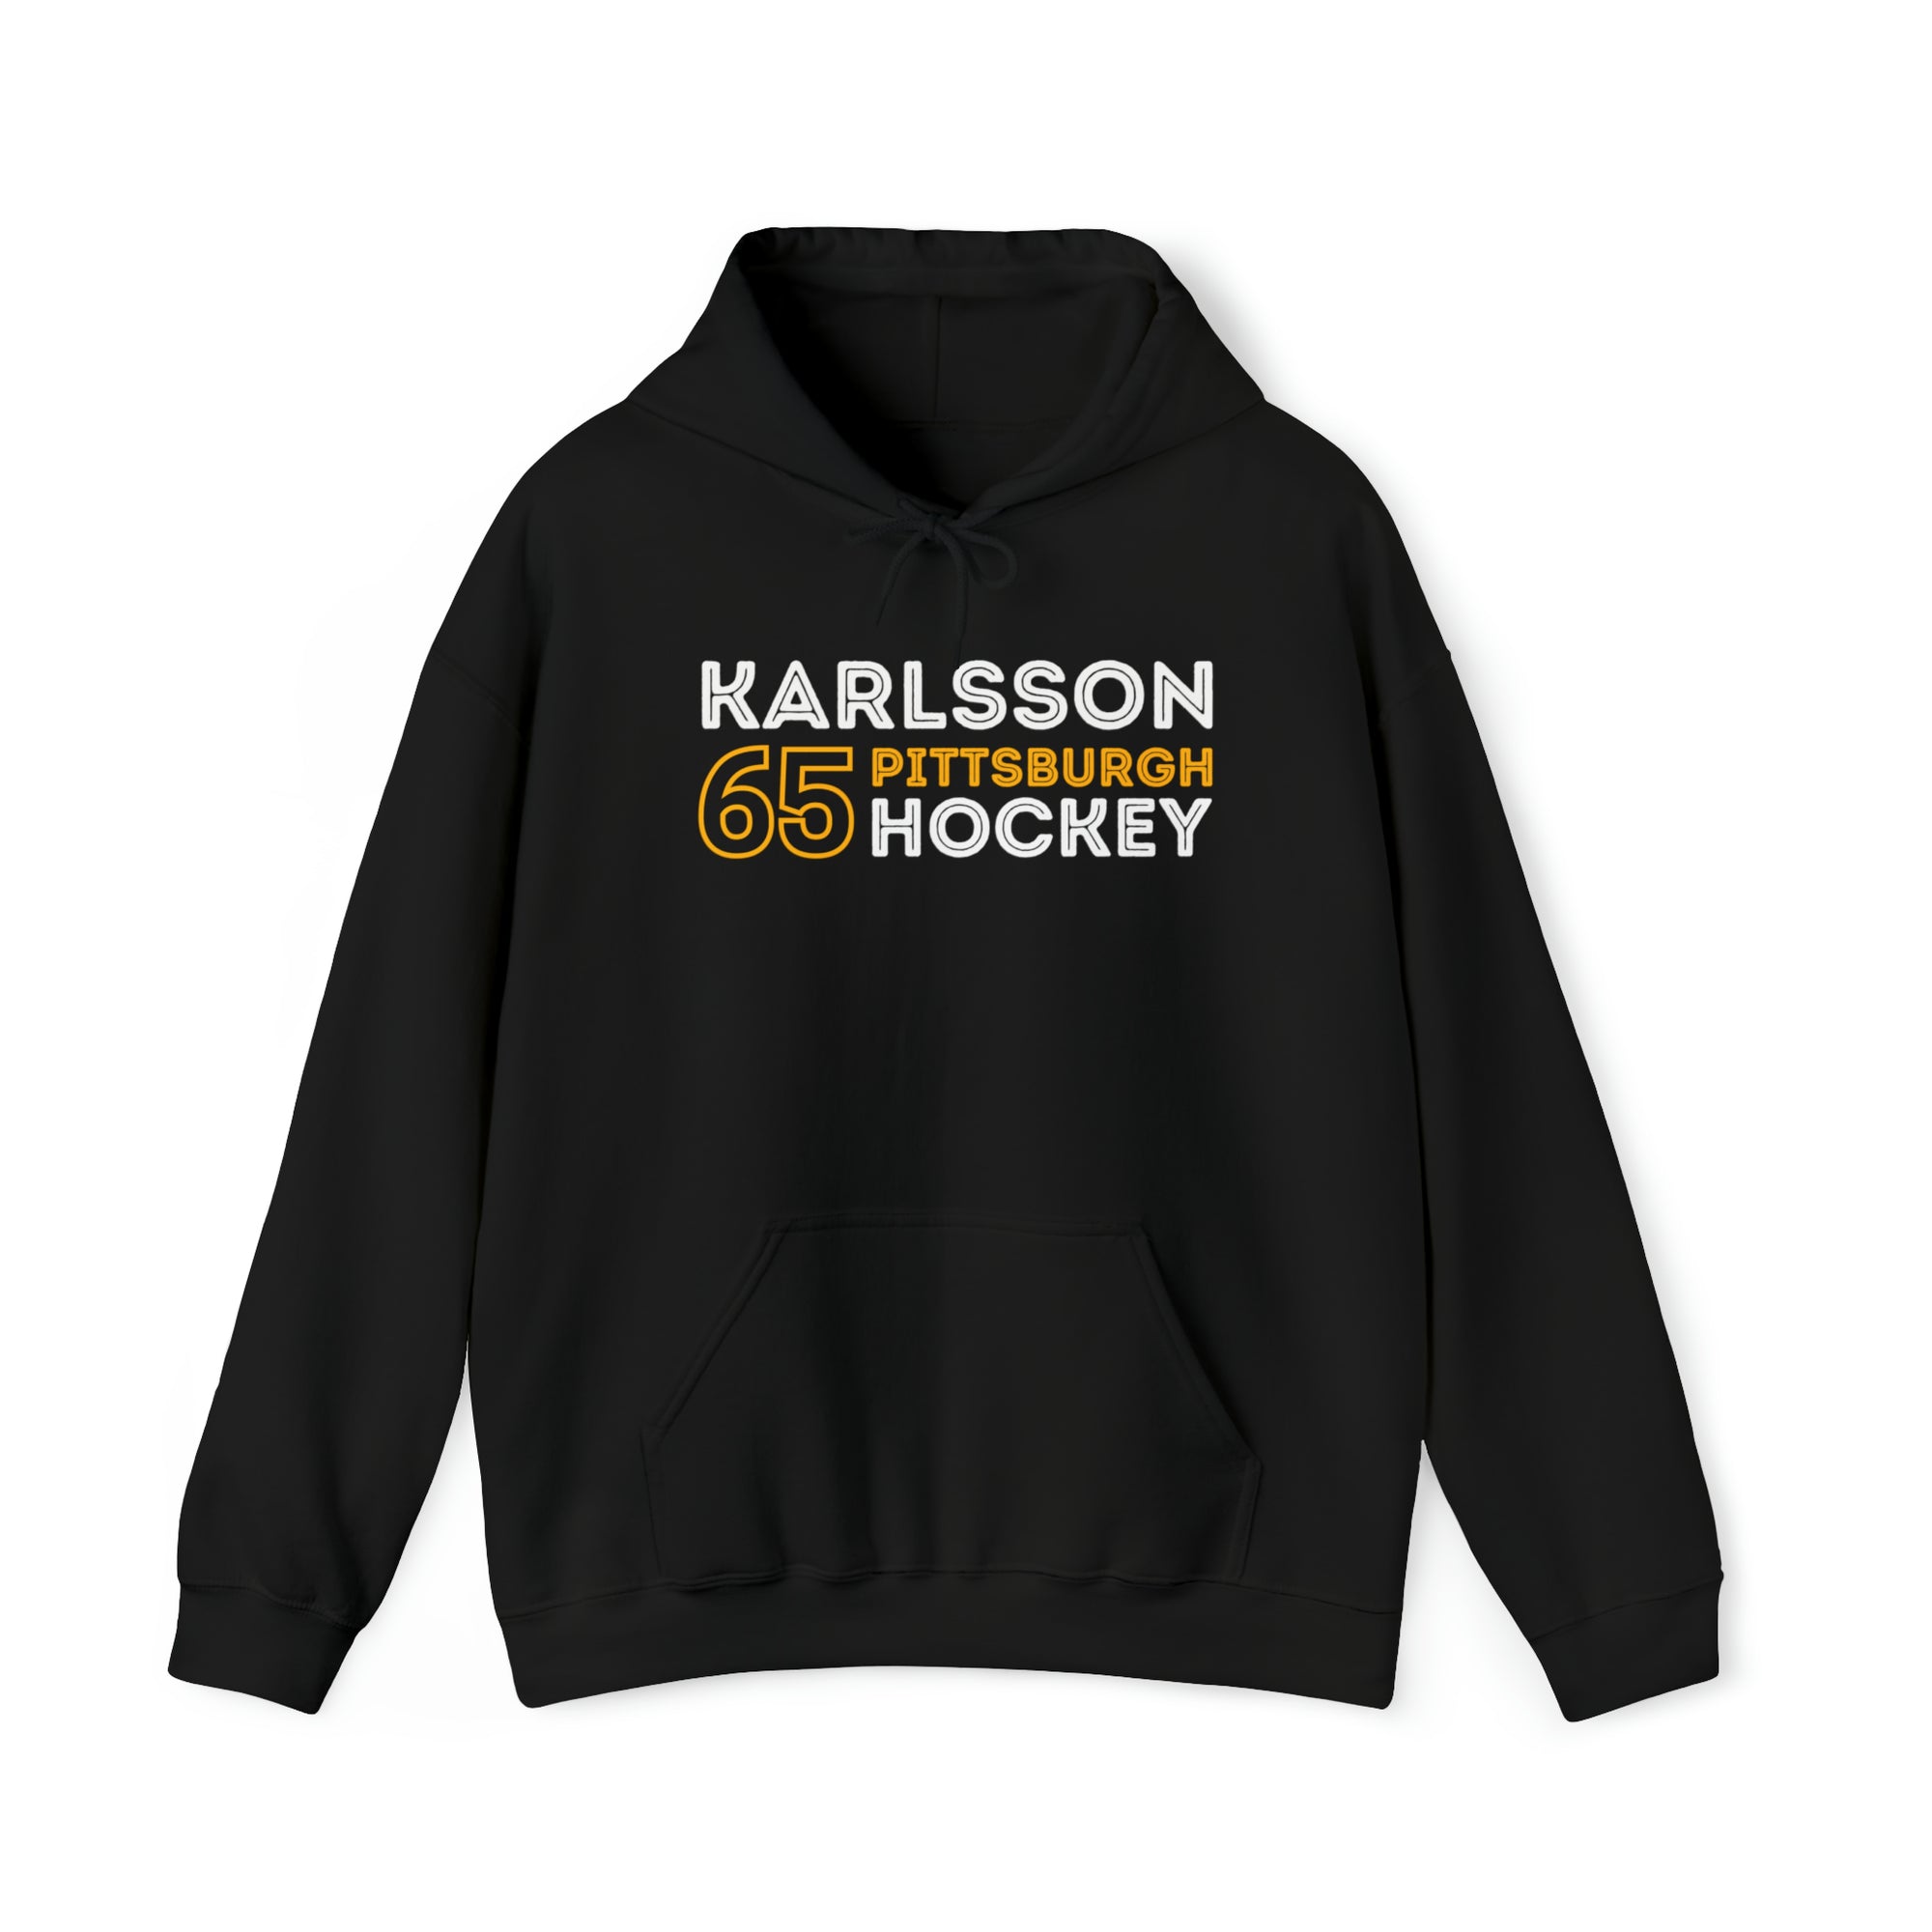 Karlsson 65 Pittsburgh Hockey Grafitti Wall Design Unisex Hooded Sweatshirt